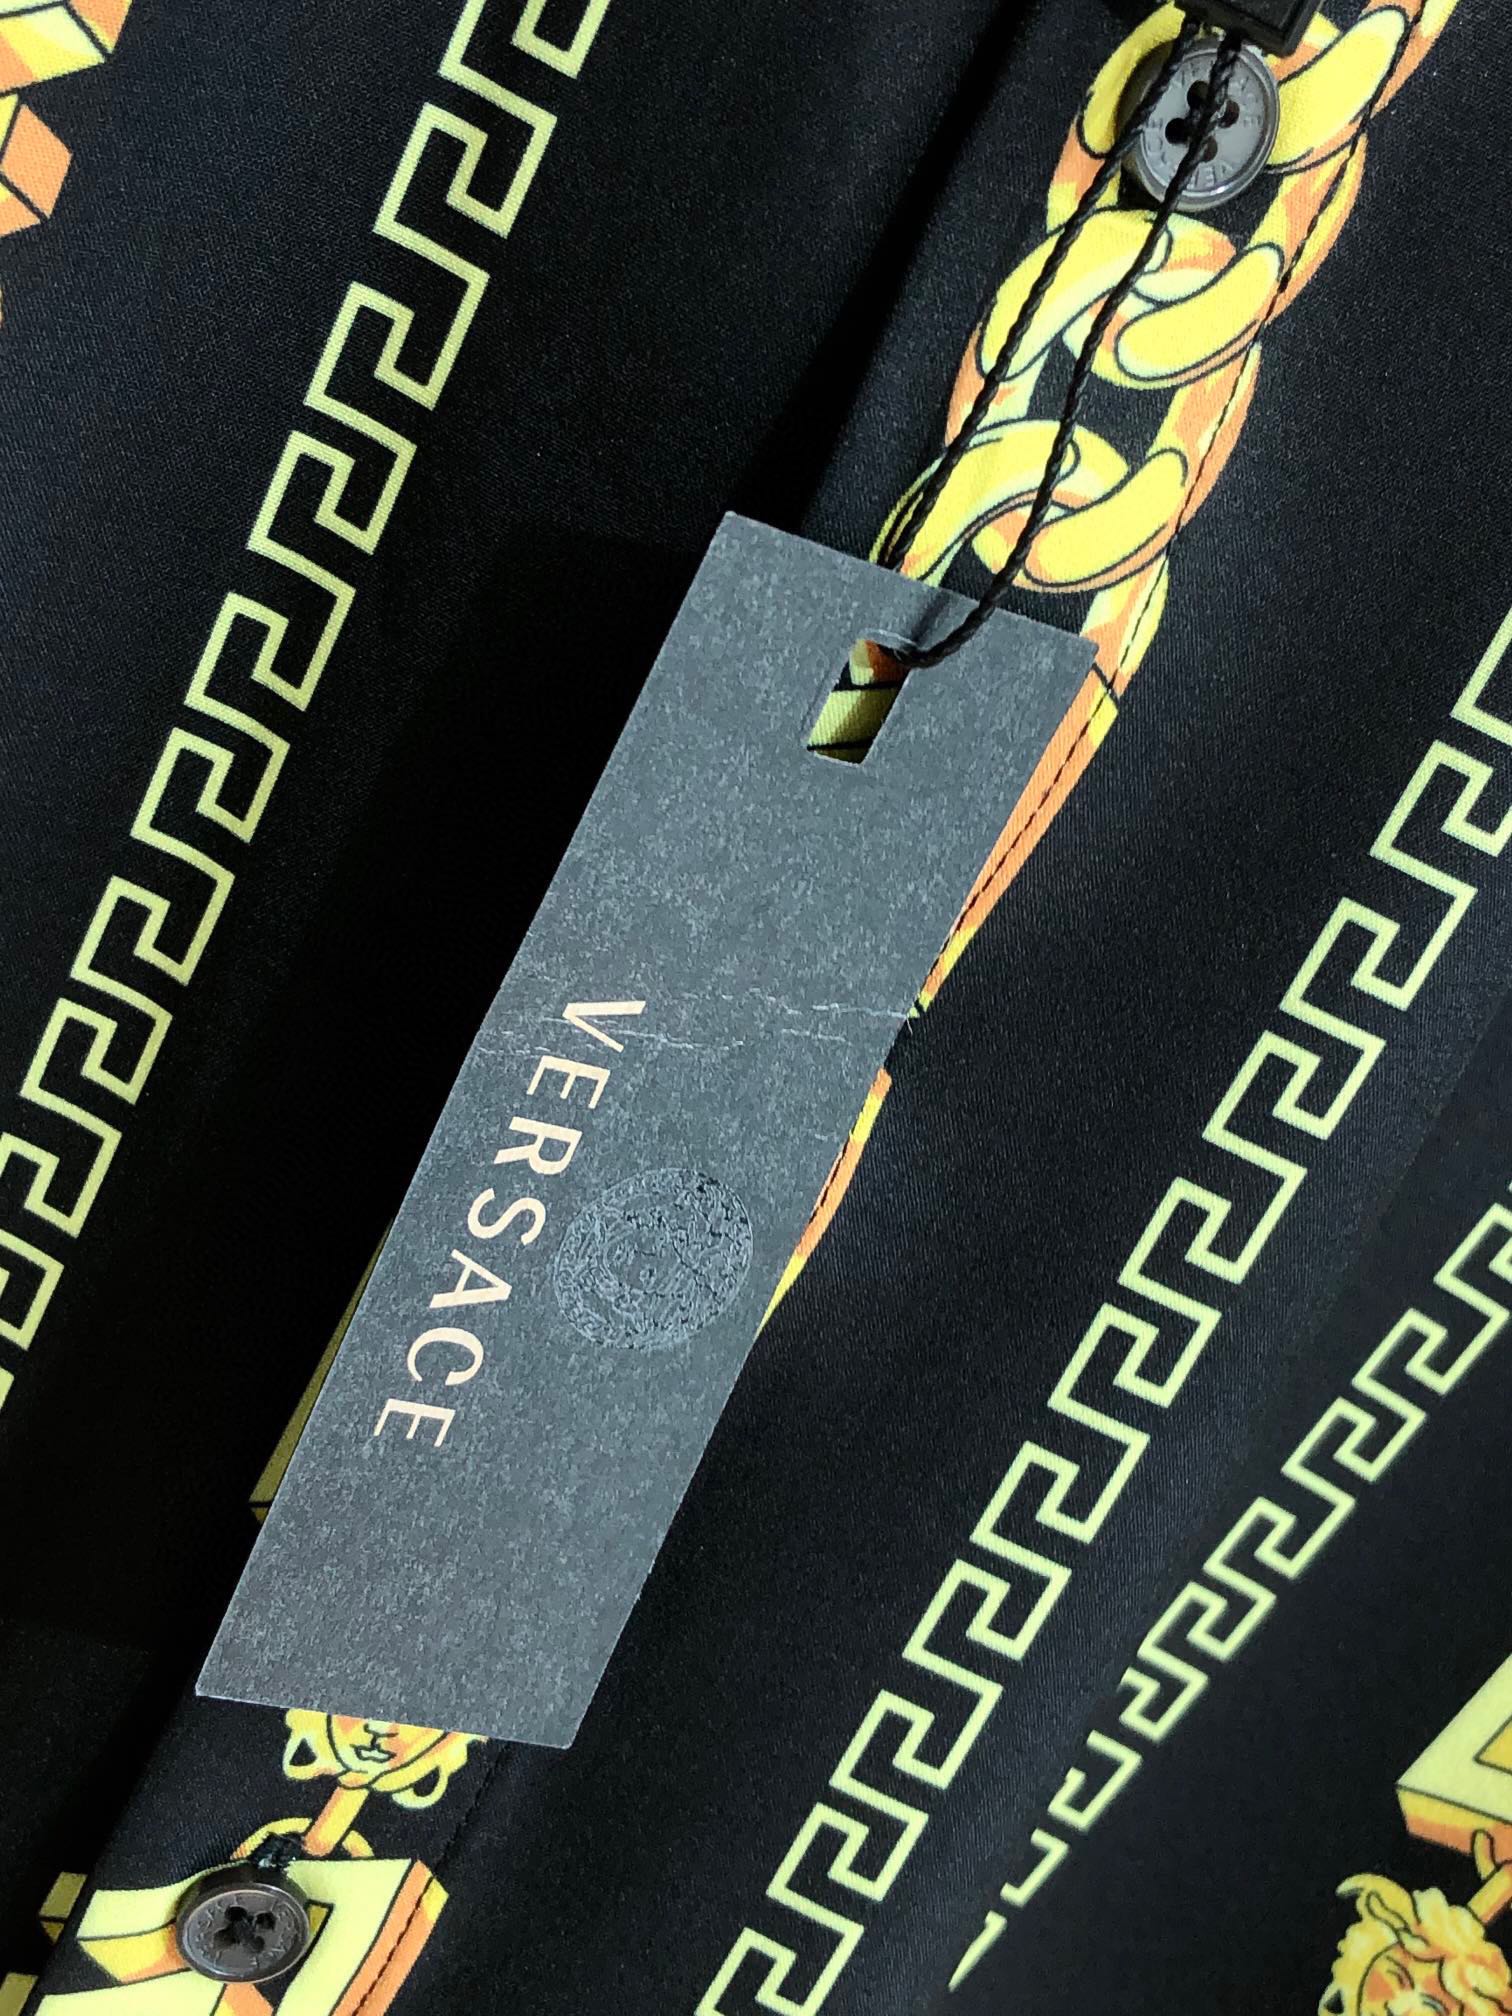 Versace Long Sleeve Shirts For Men # 269800, cheap Versace Shirts, only $48!